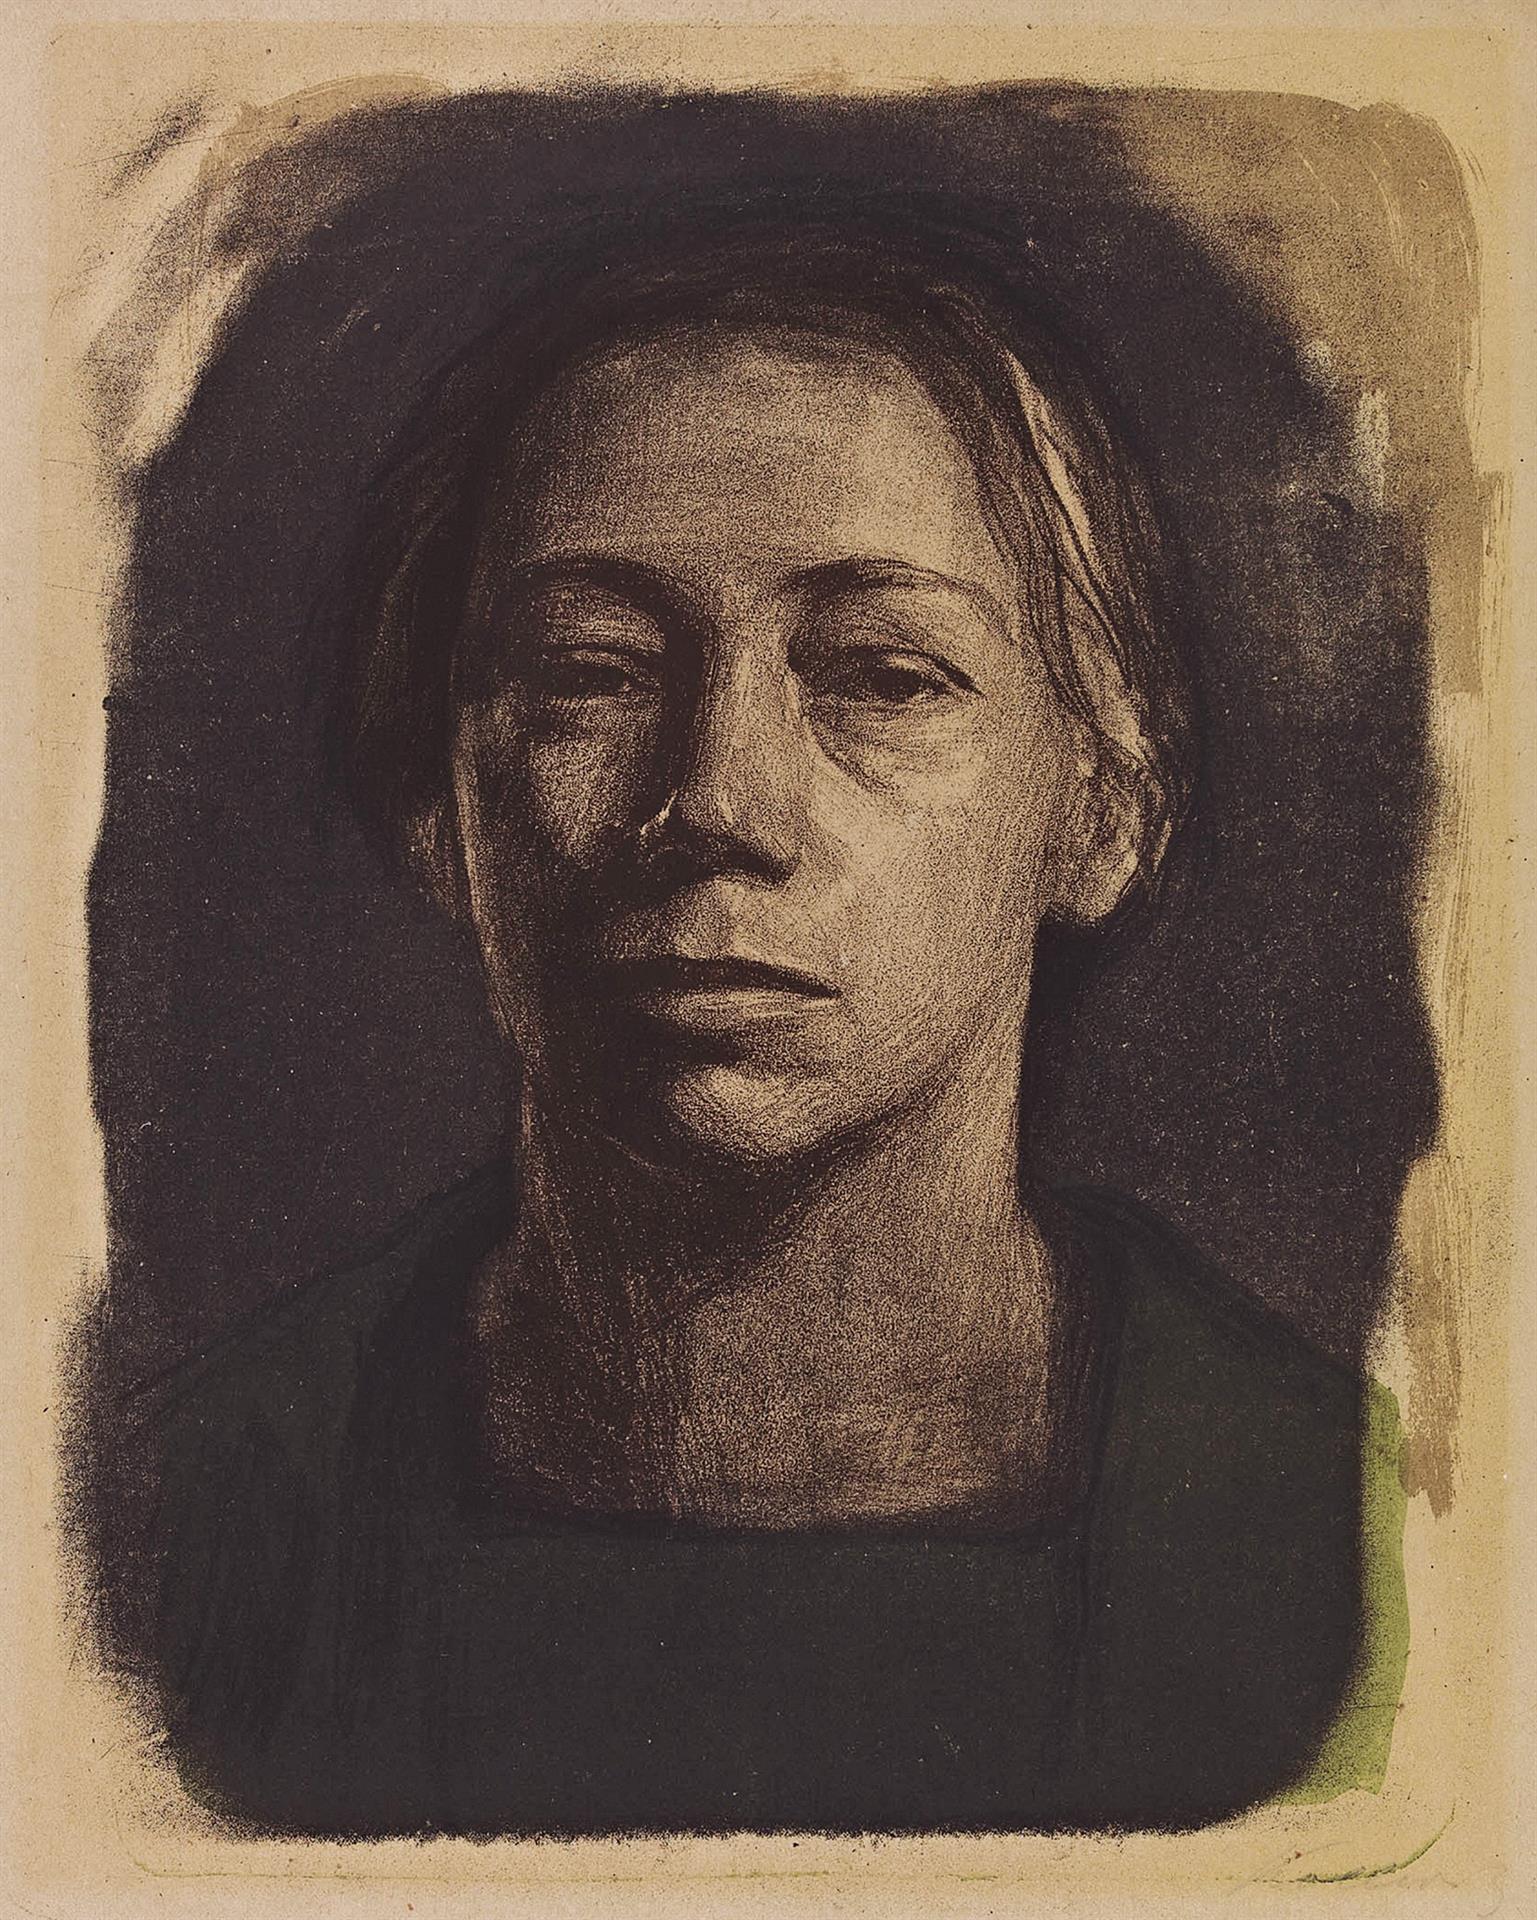 Käthe Kollwitz, Self-portrait »en face«, 1904, crayon and brush lithograph with spray technique in four colors, Kn 85 II A, Cologne Kollwitz Collection © Käthe Kollwitz Museum Köln